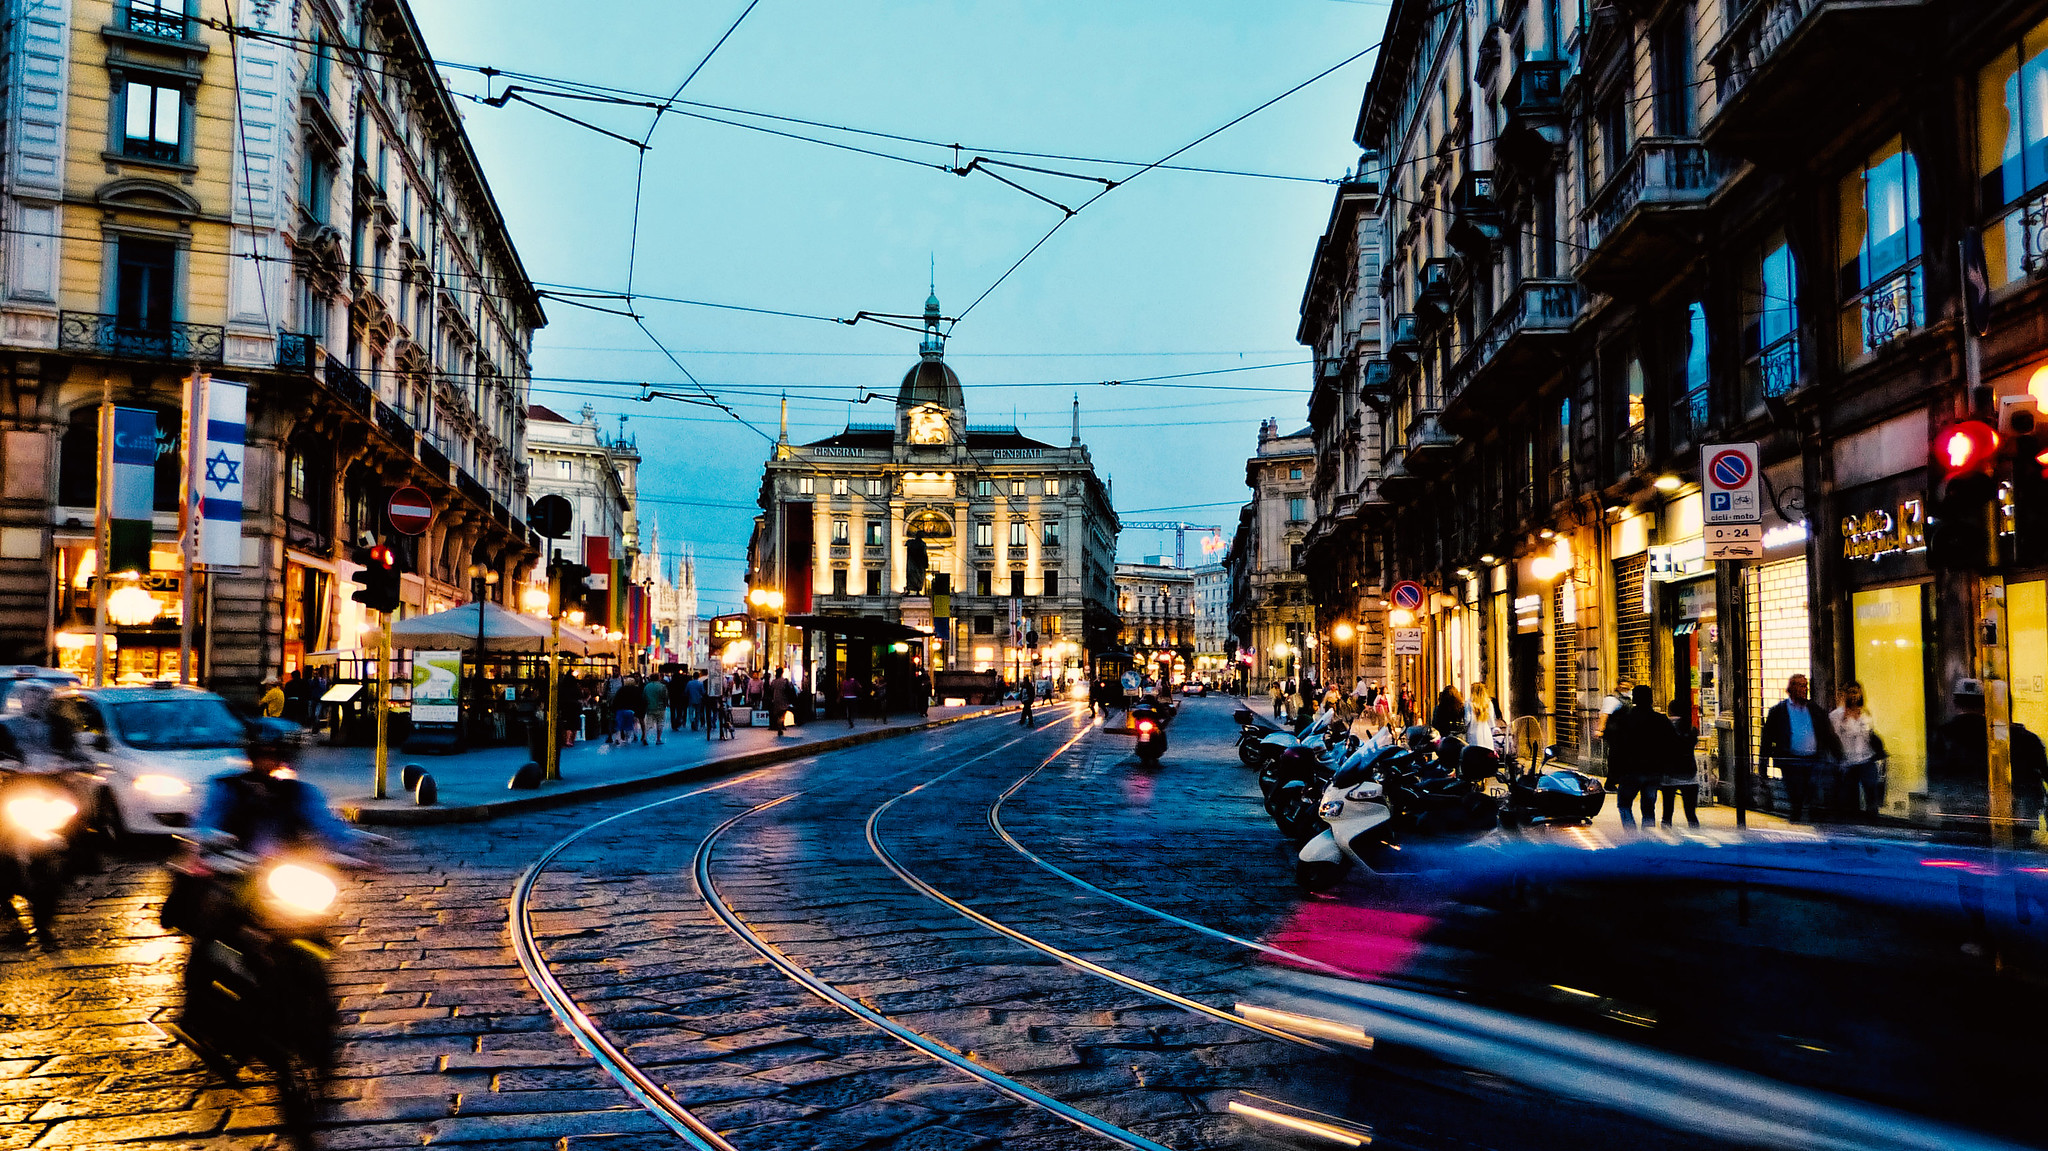 tram via and light in milan